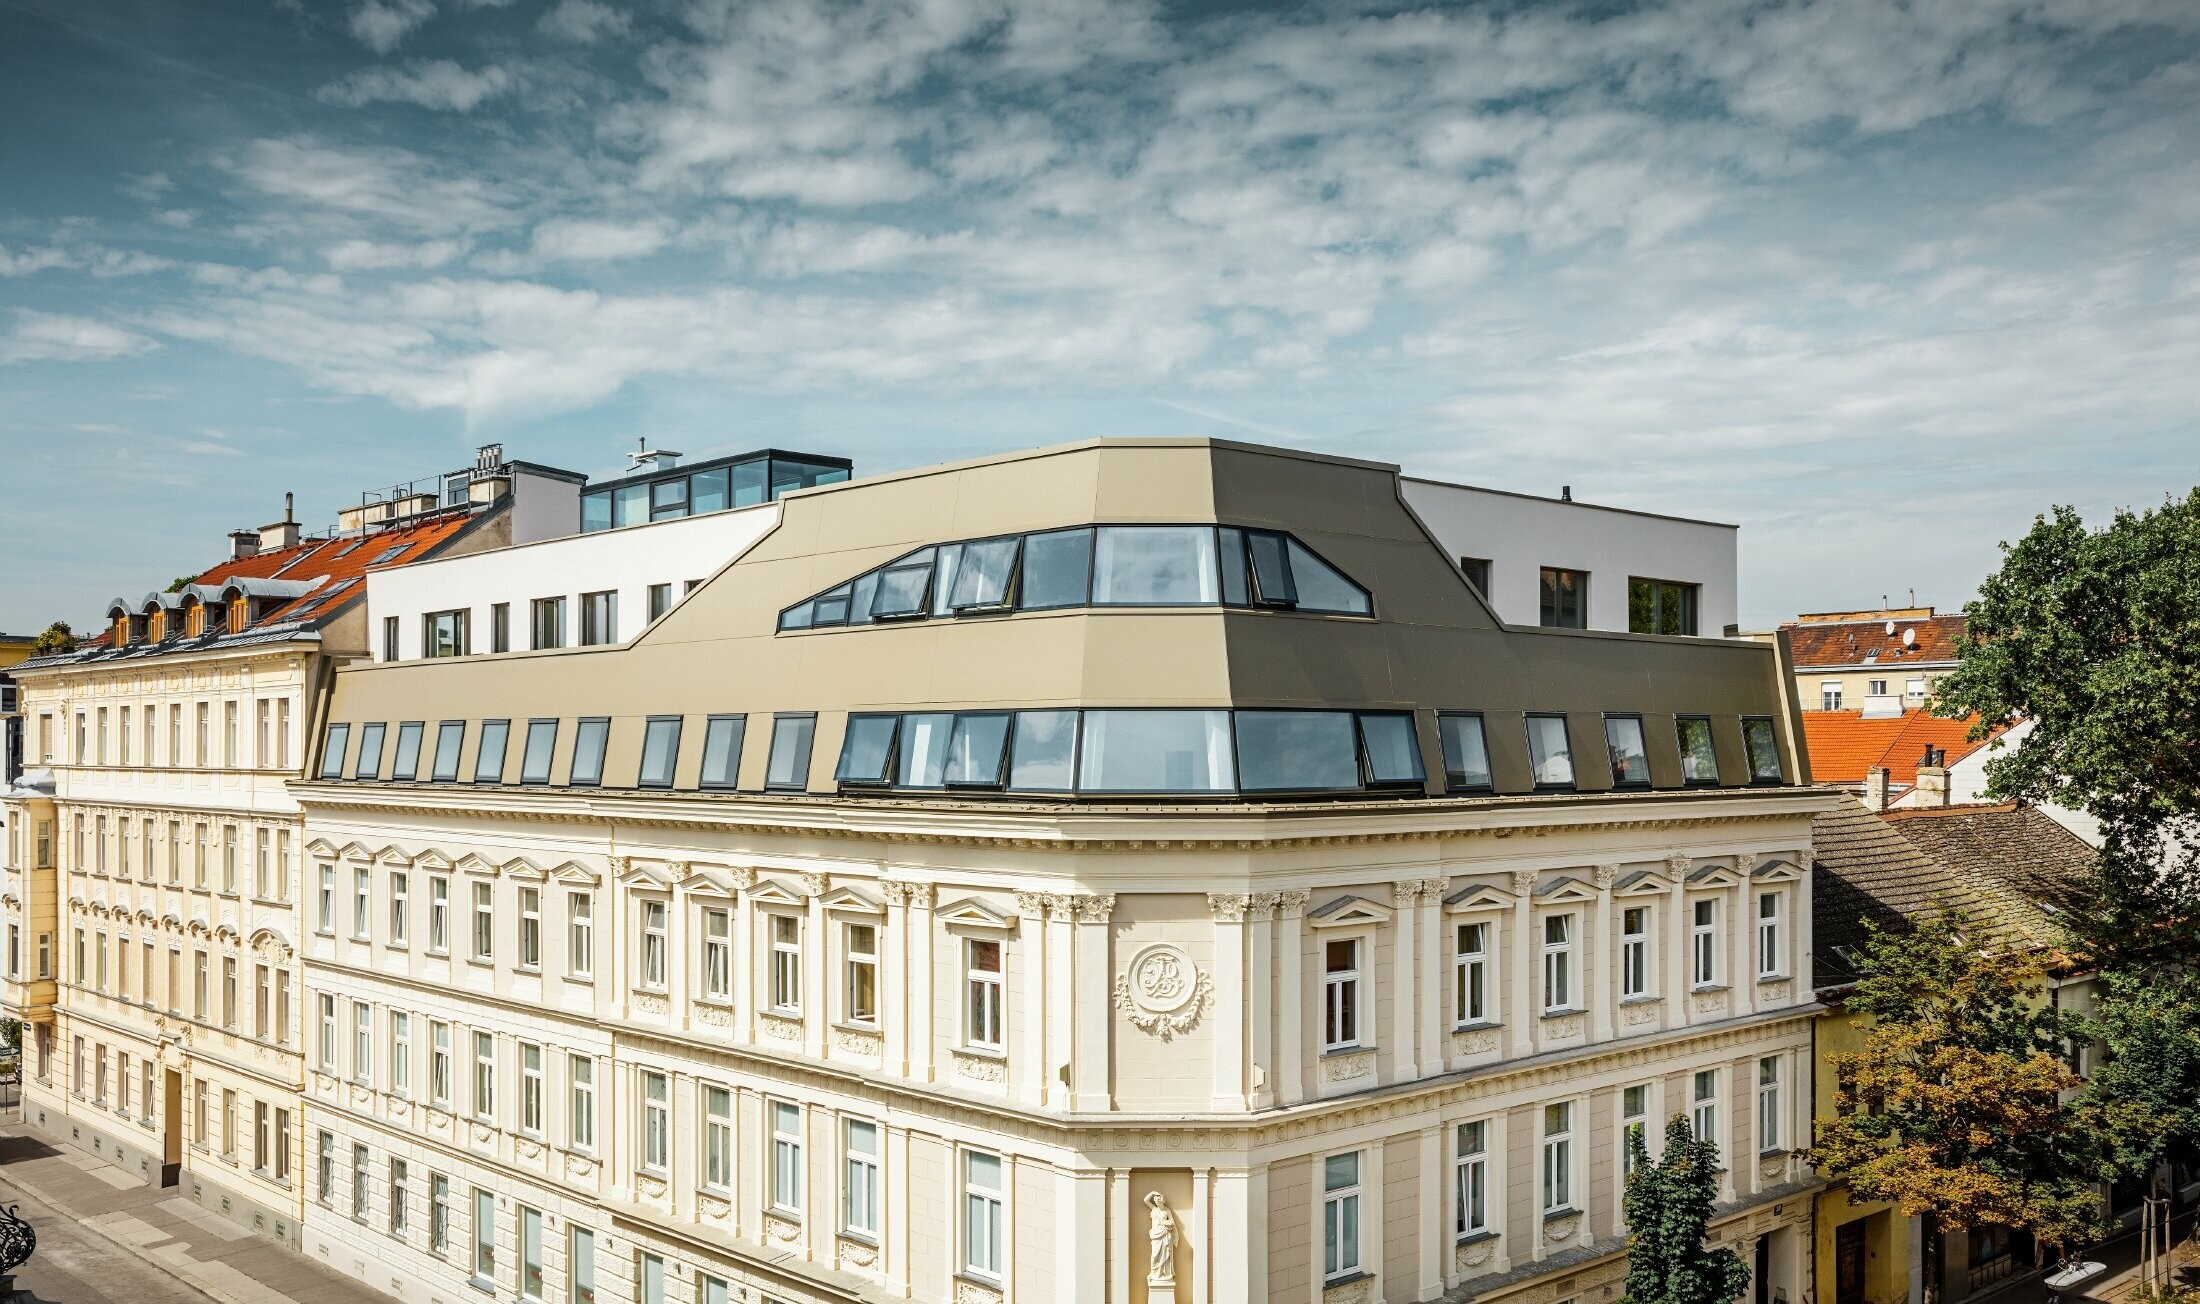 Roof extension in Schloßhofer Straße, Vienna (Austria) with PREFA aluminium composite panels in bronze